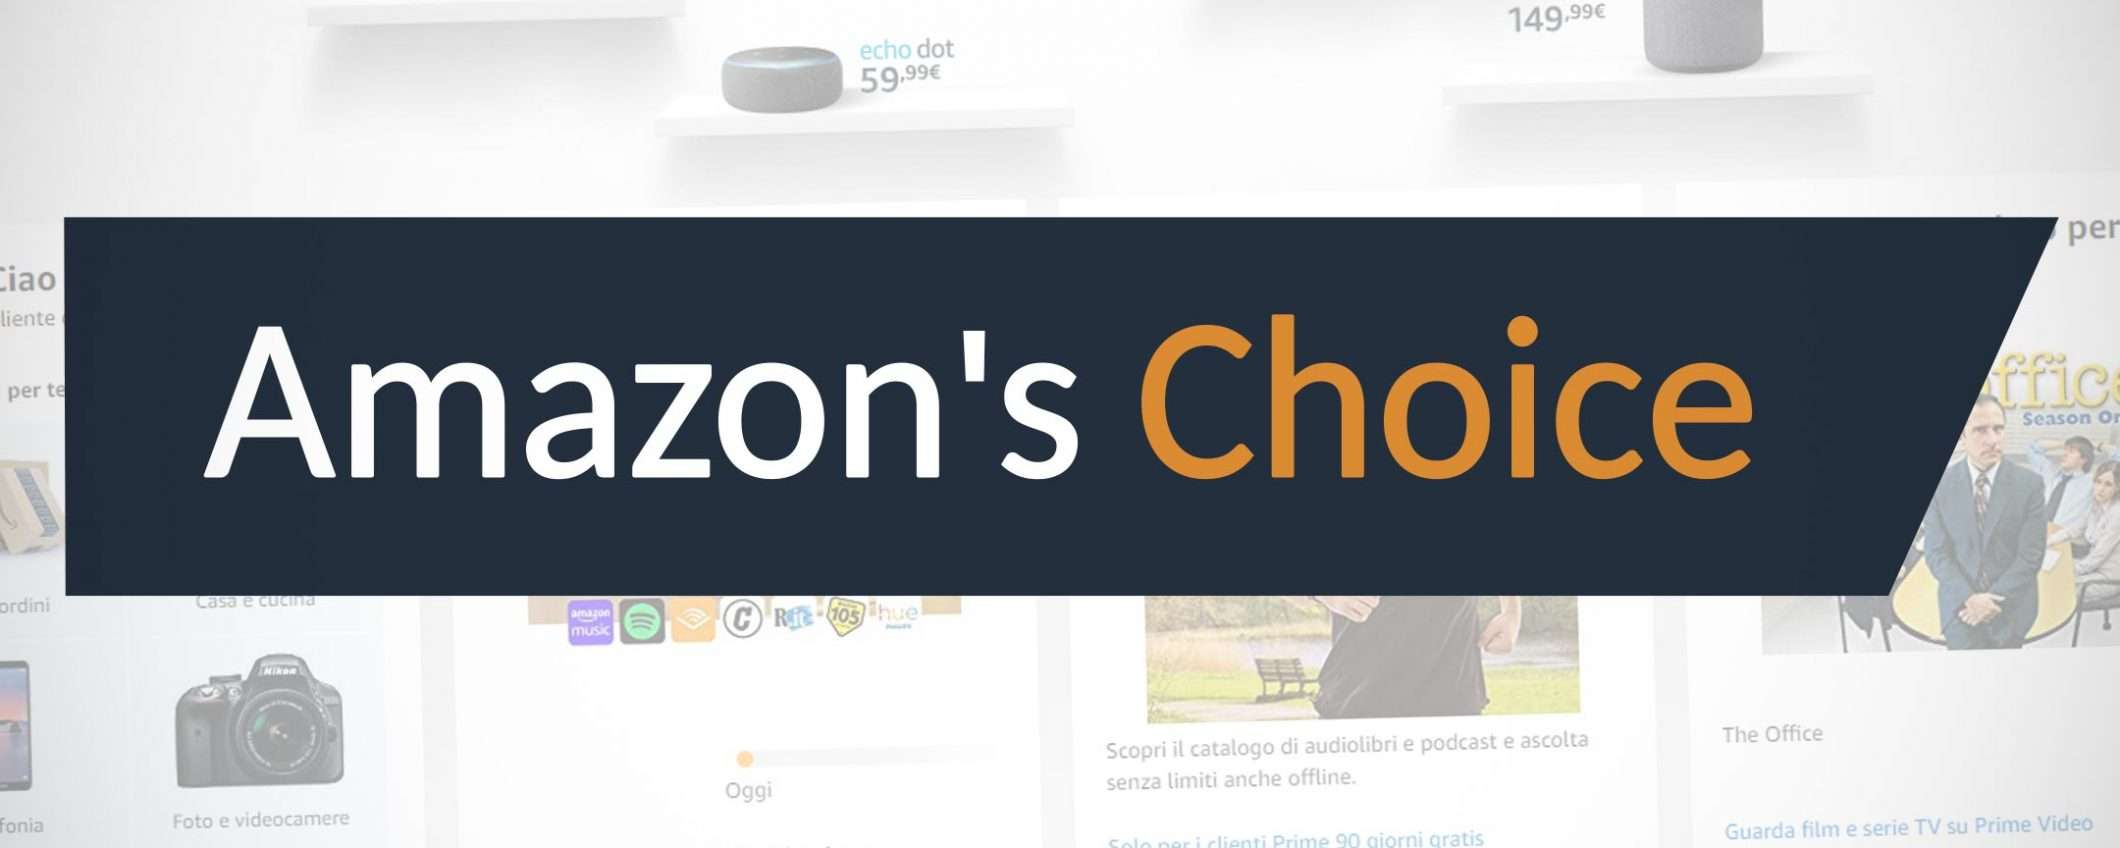 L'etichetta Amazon's Choice è garanzia di qualità?